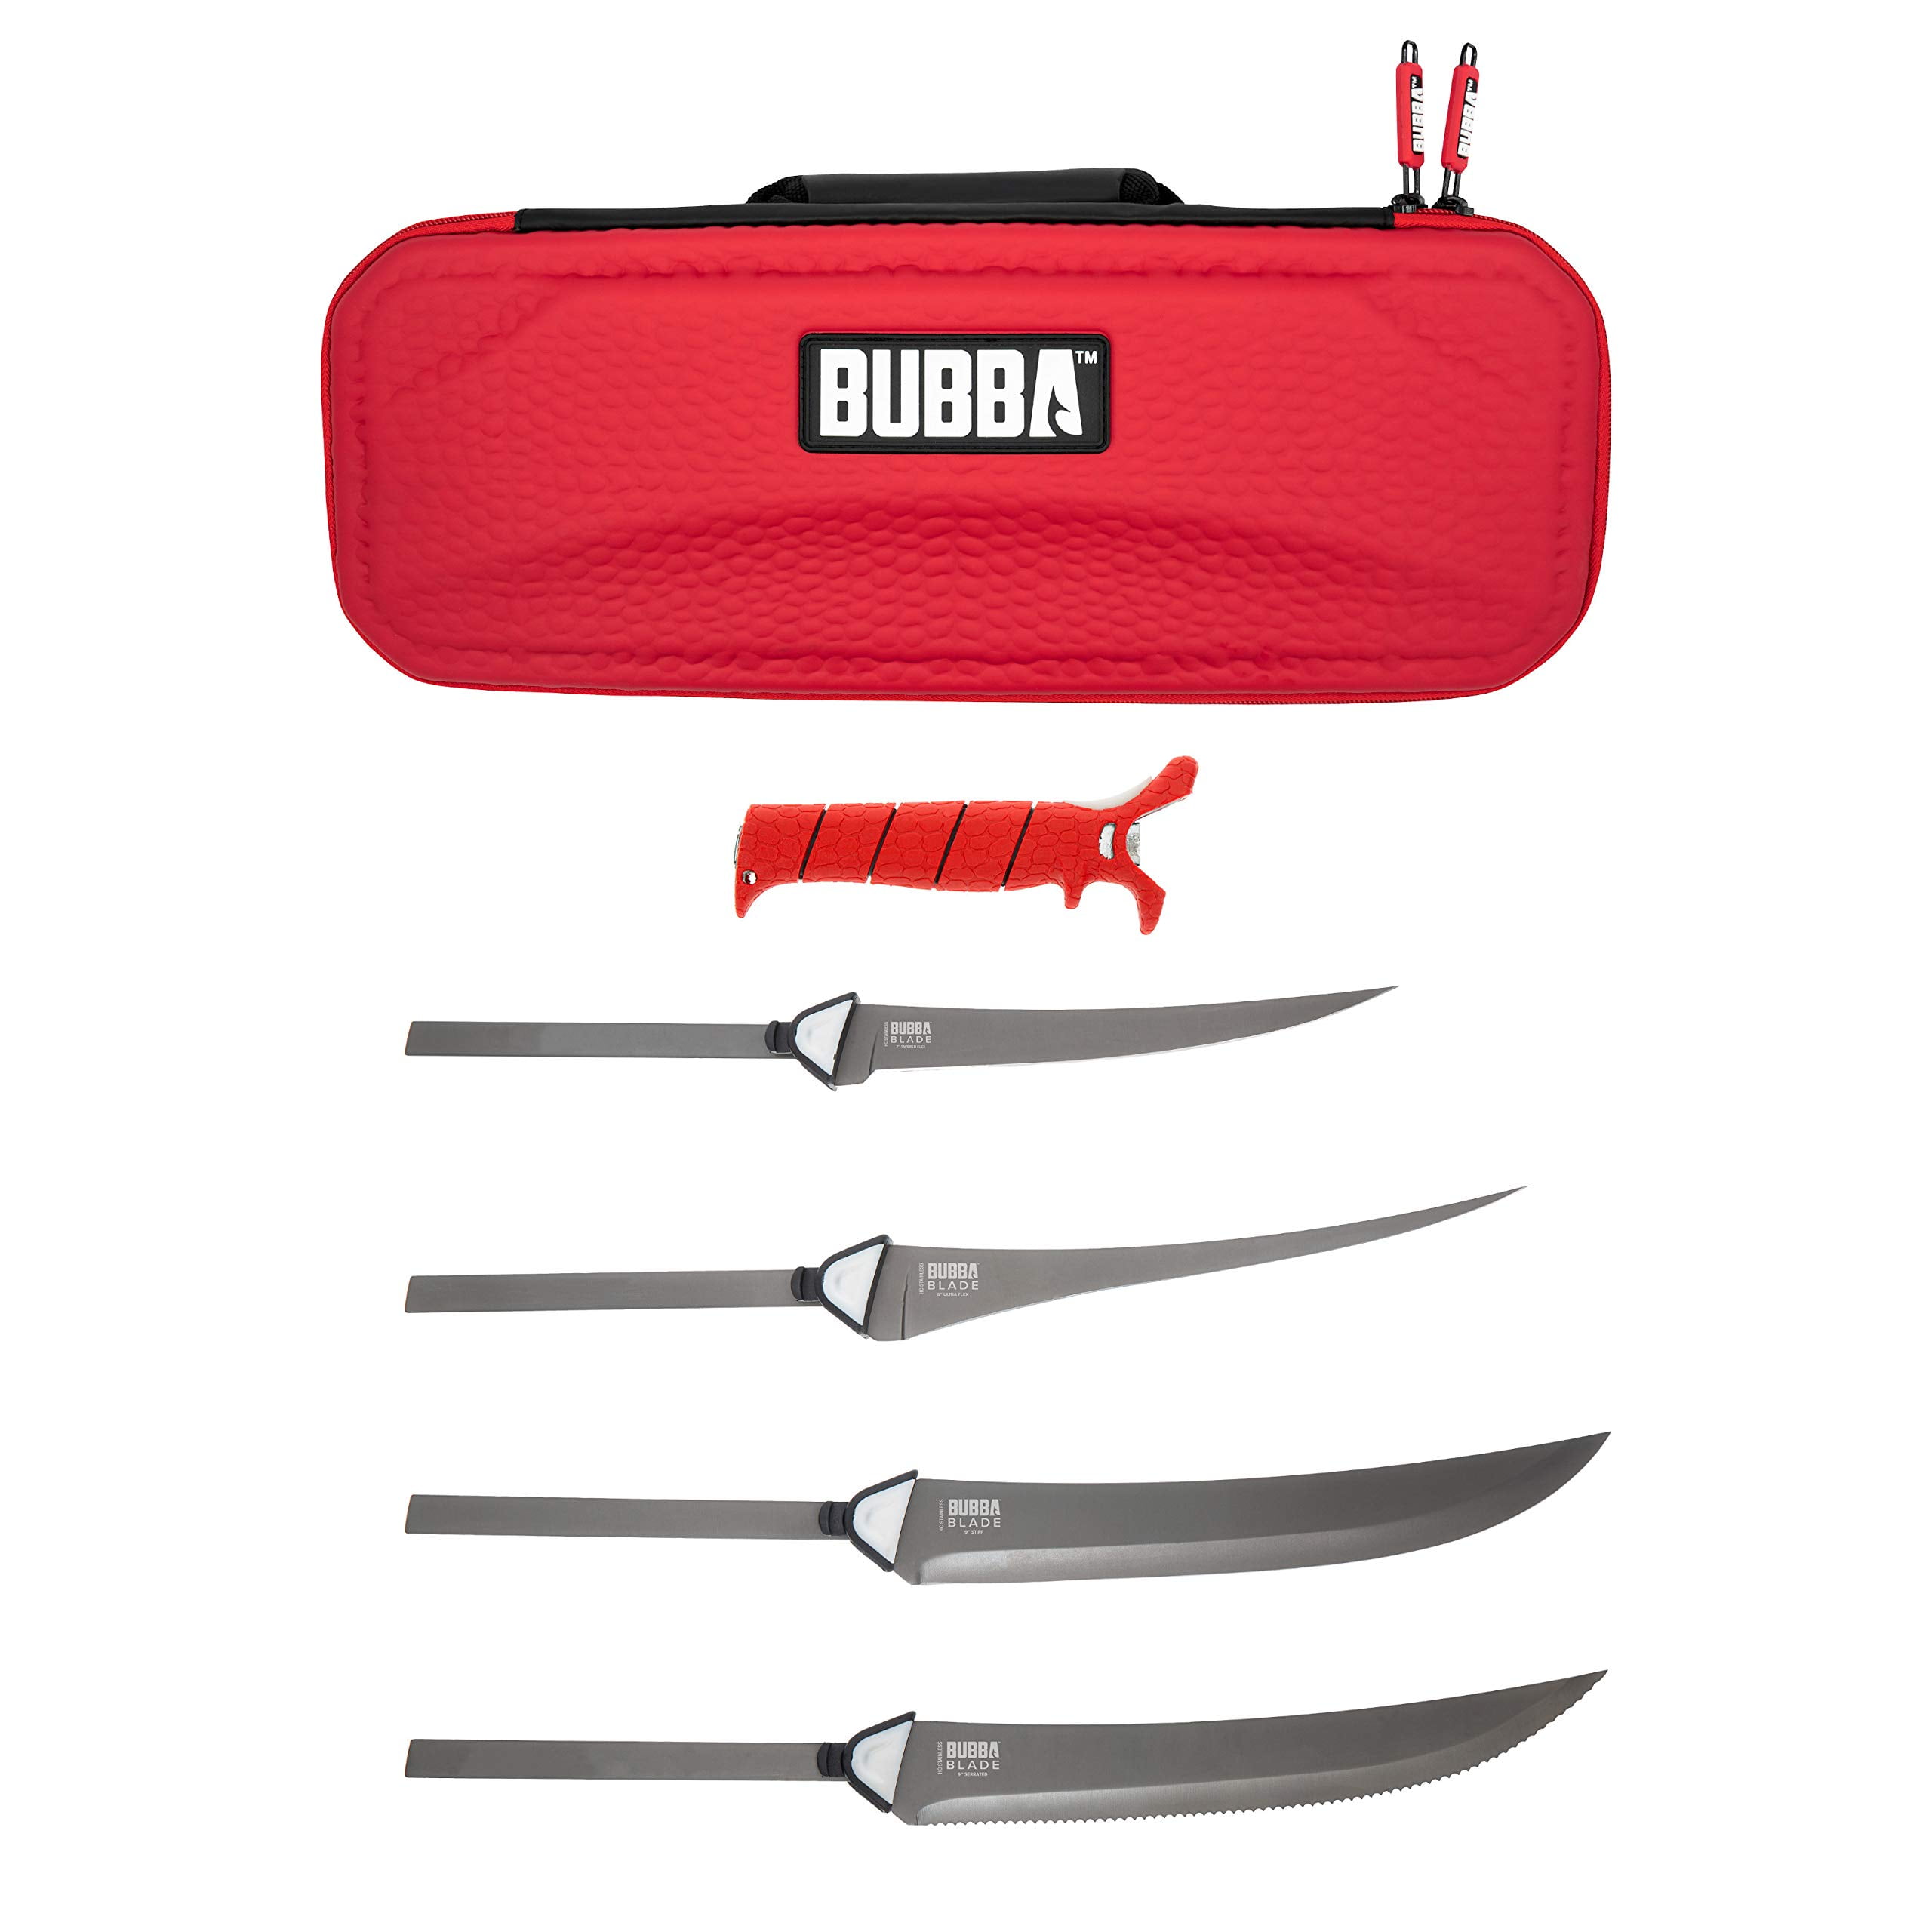 BUBBA Multi-Flex Interchangeable Blade, with Non-Slip Grip Handle